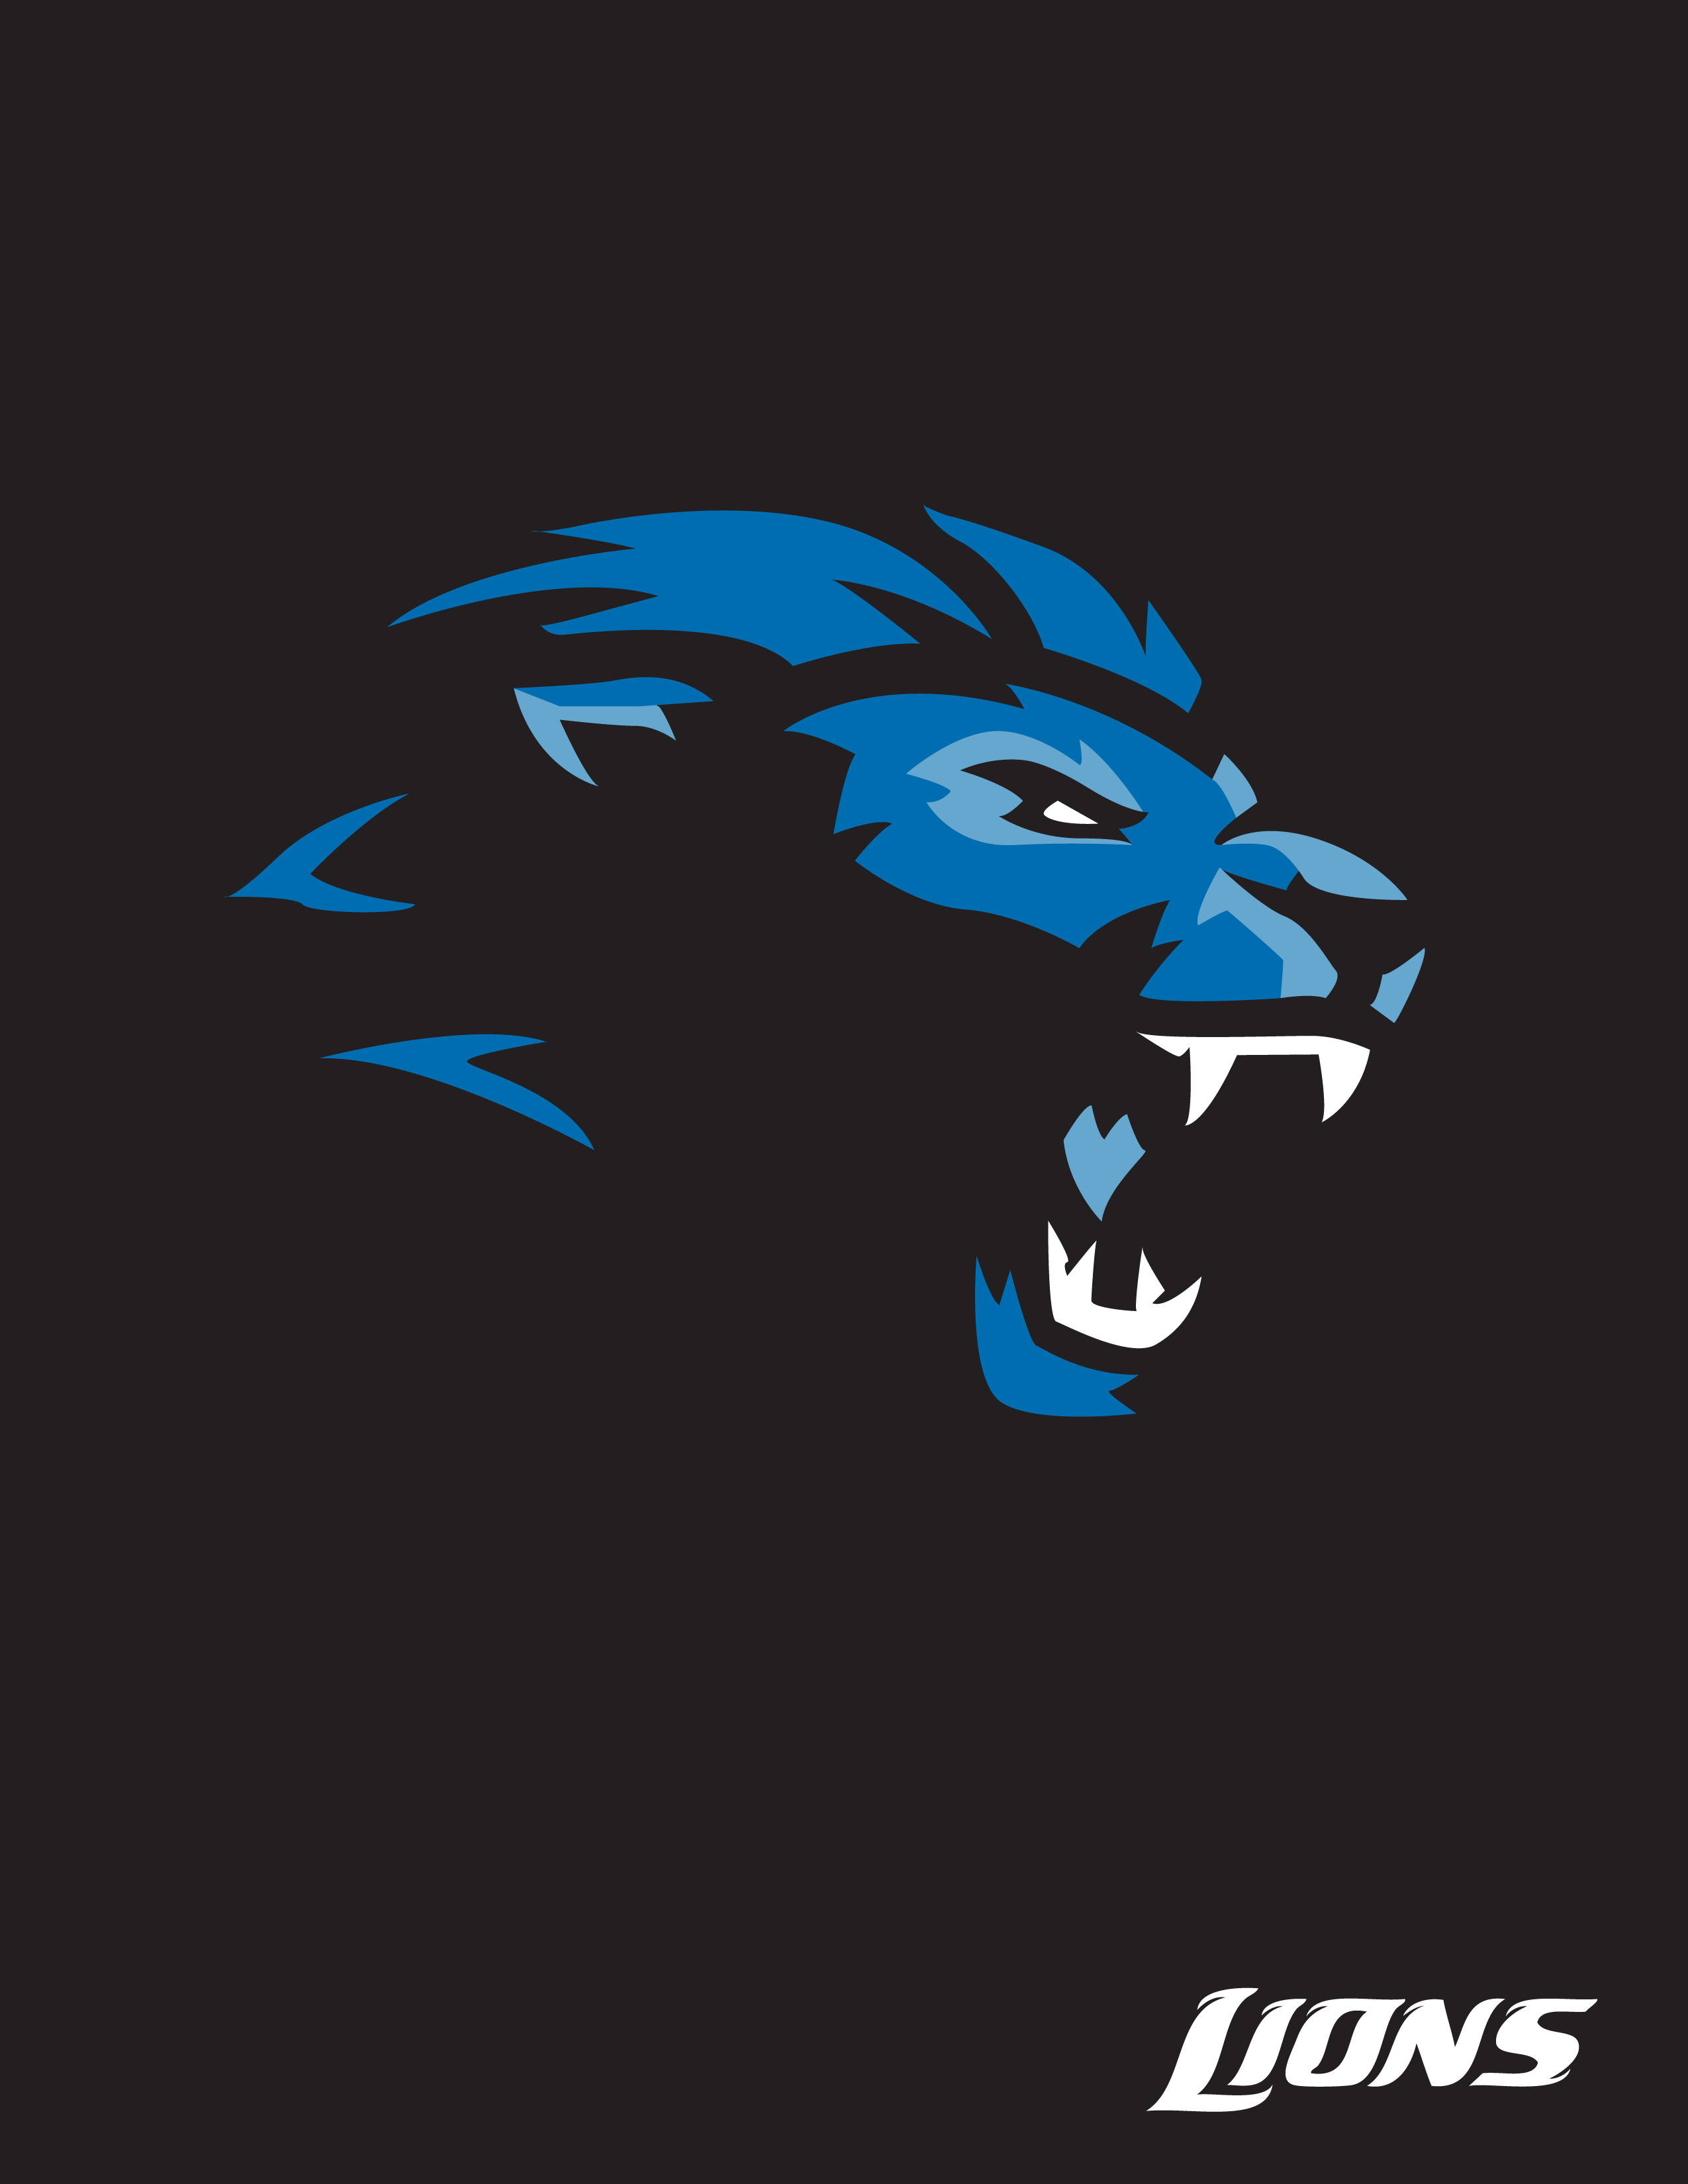 Detroit Lions Logo - Lions logo Design I did for fun : detroitlions